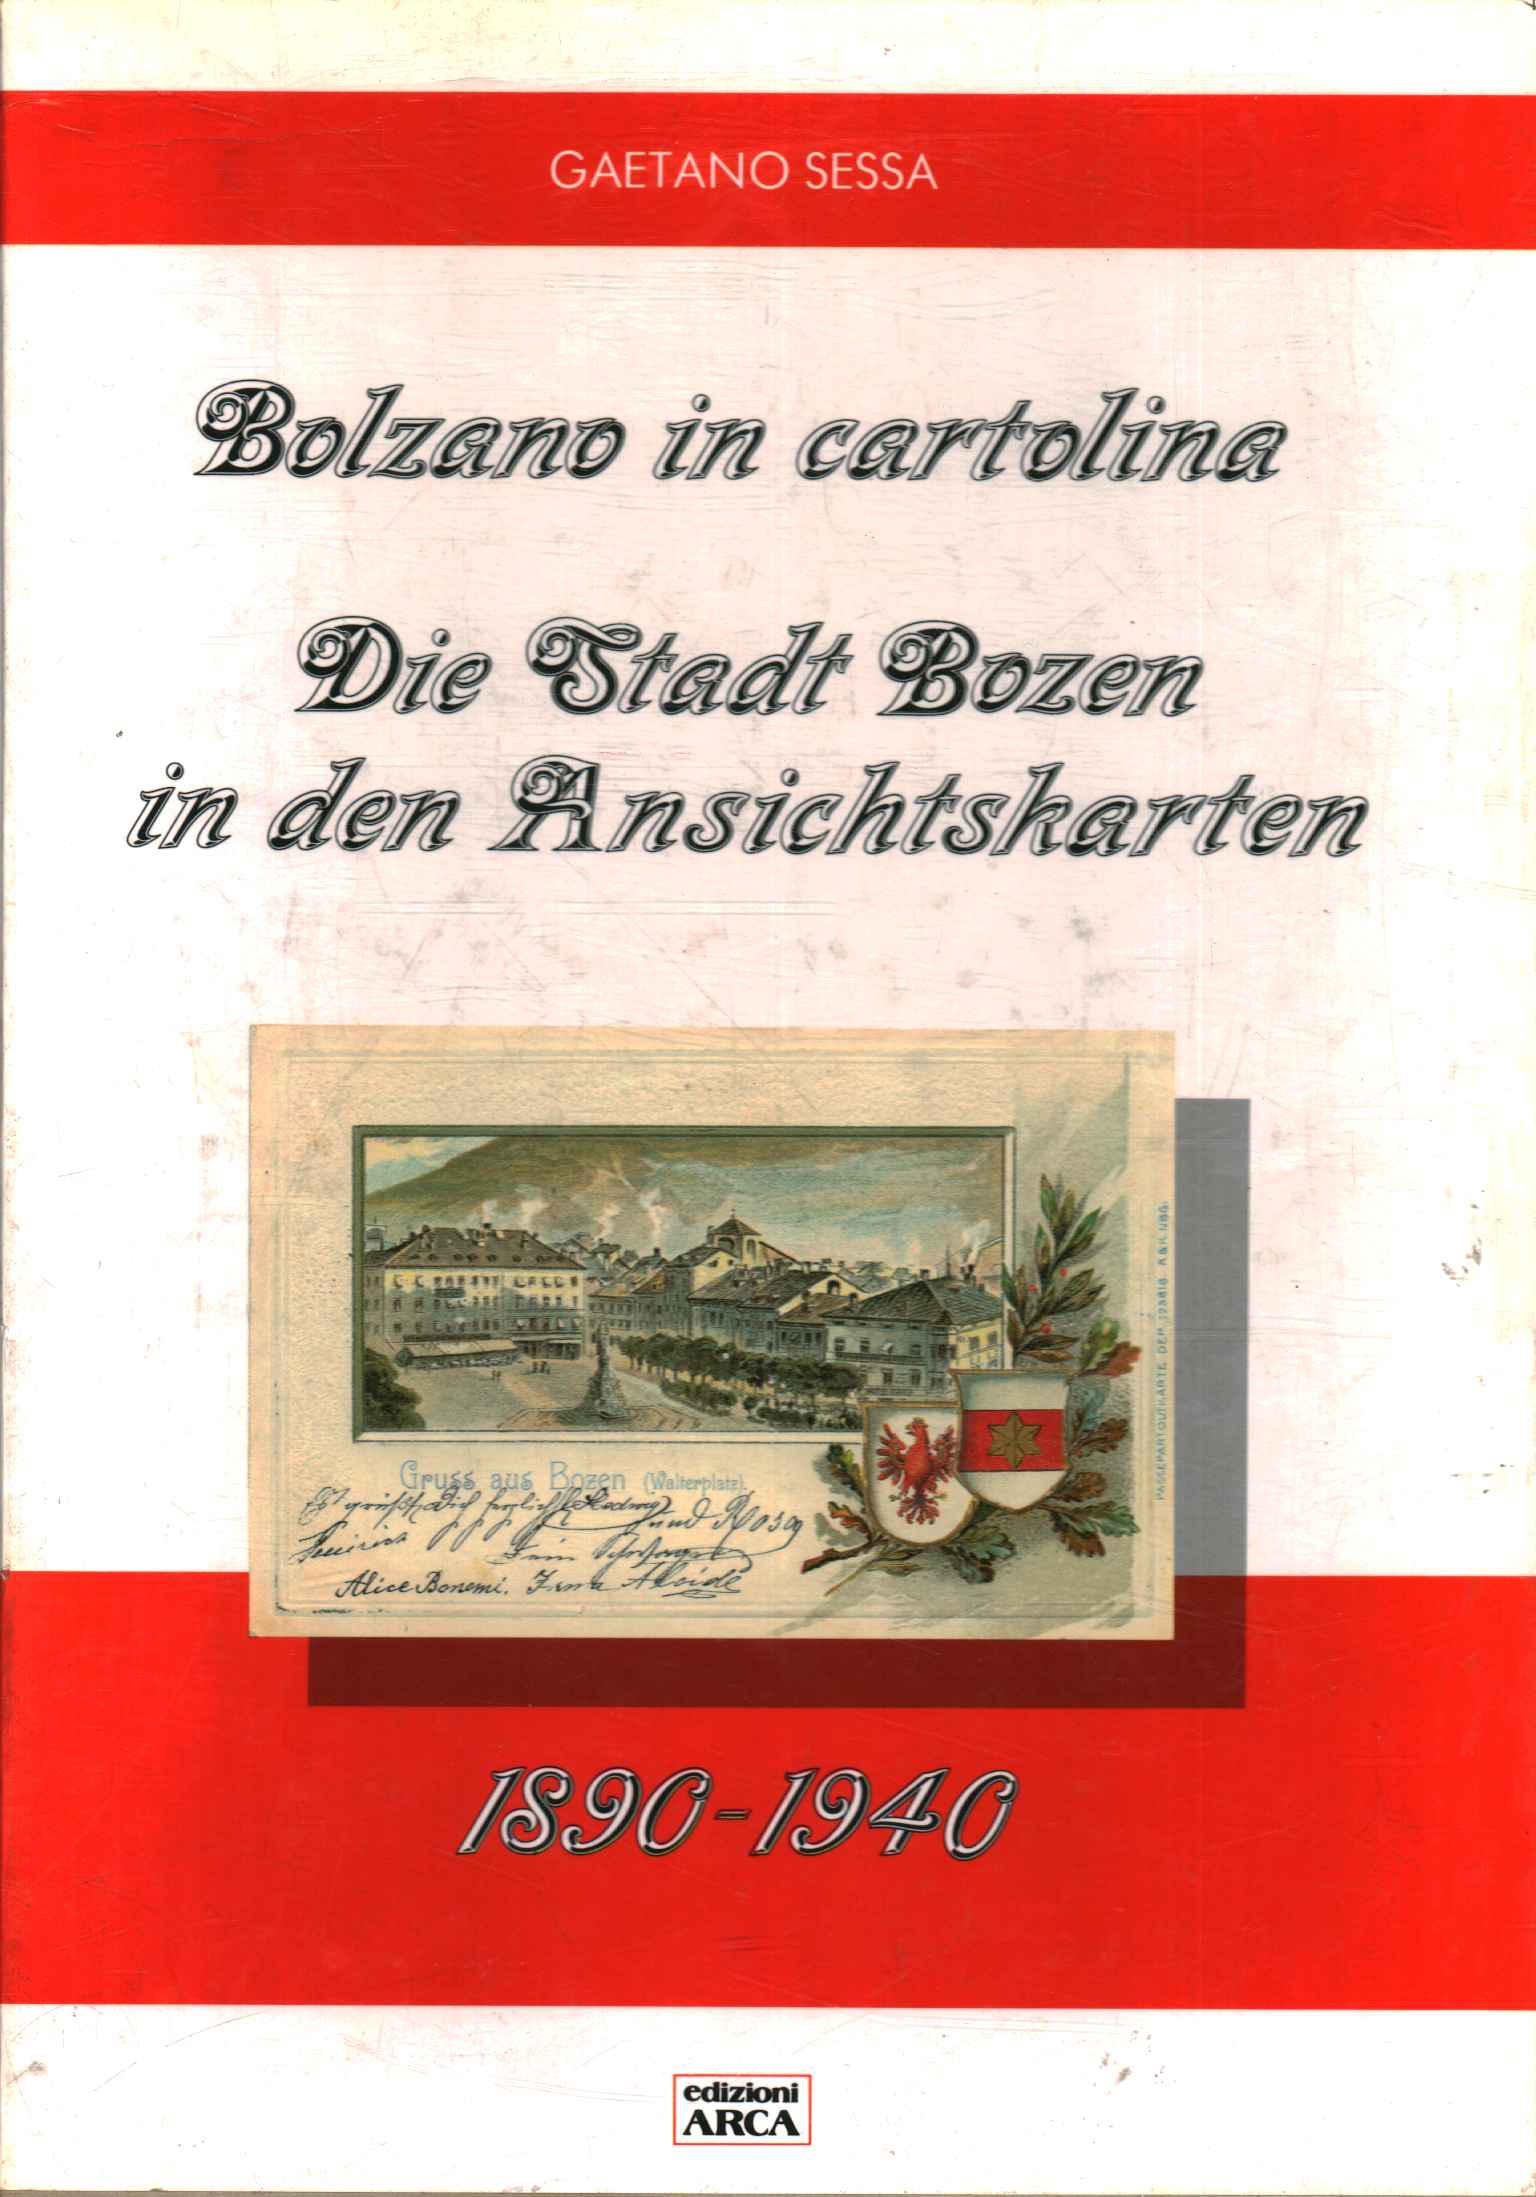 Bolzano on a postcard. Die Stadt Bozen